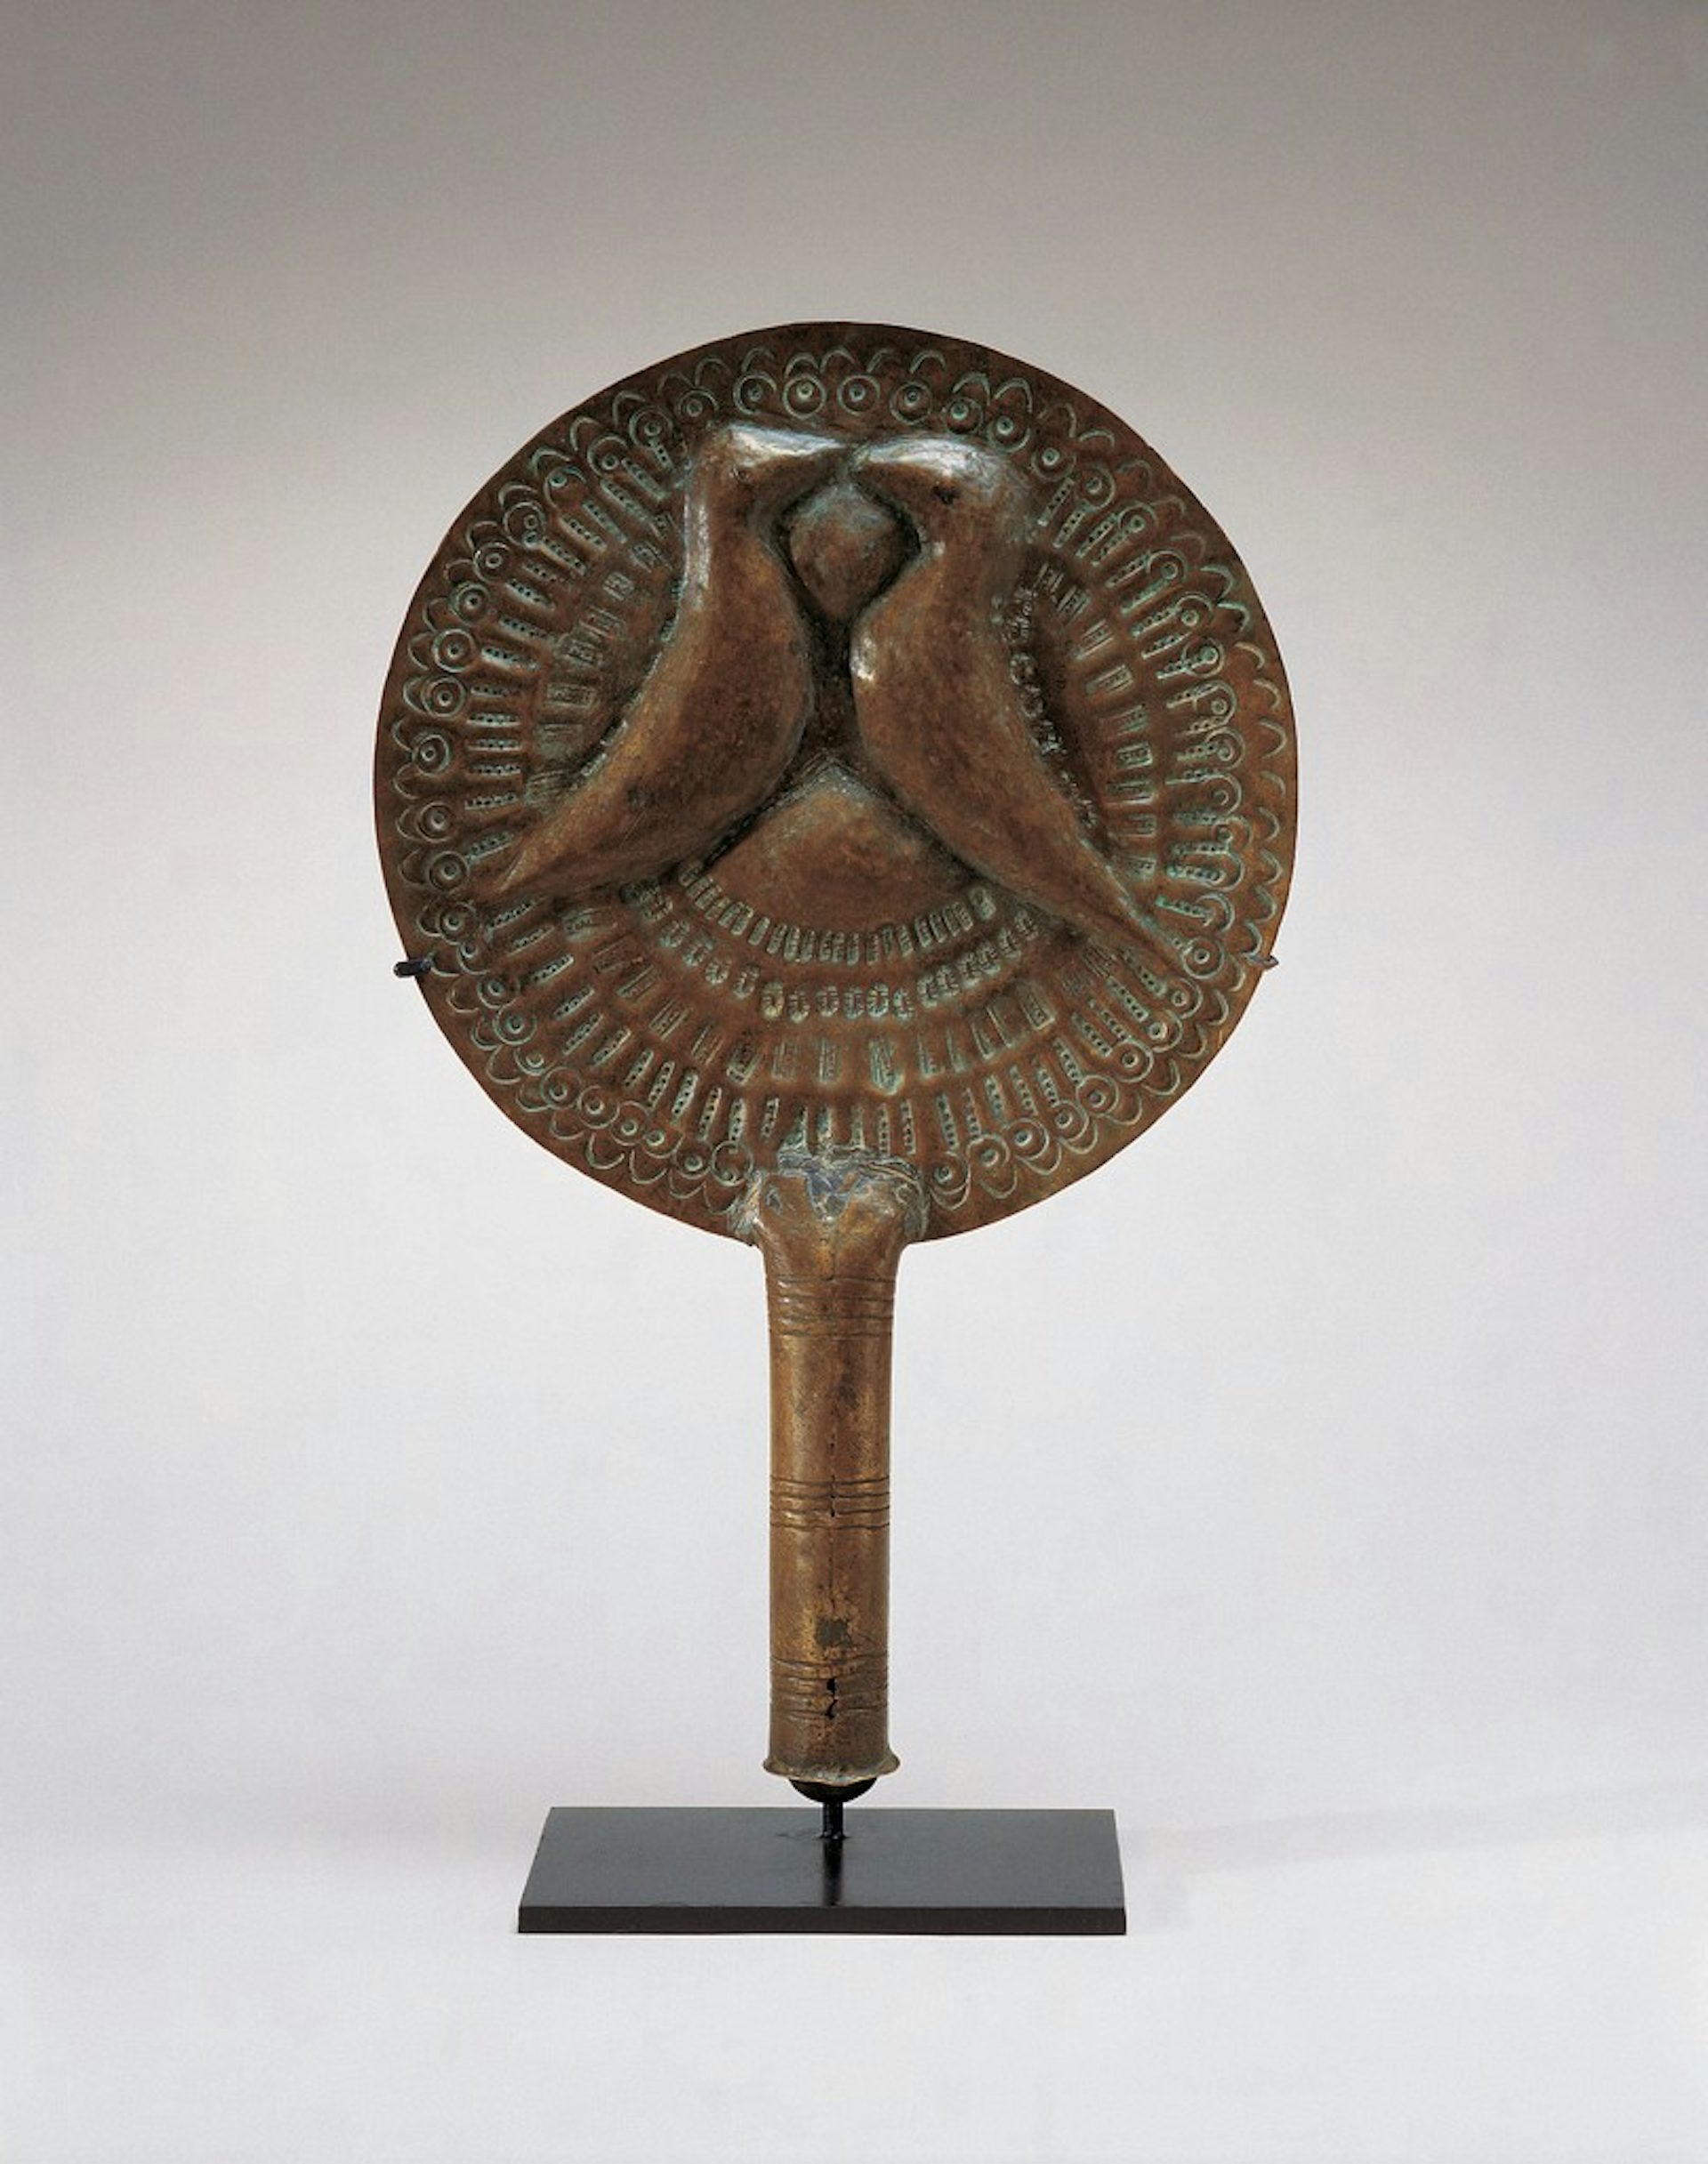 Fan for Osun by Yoruba artist (late 19th –early 20th century).